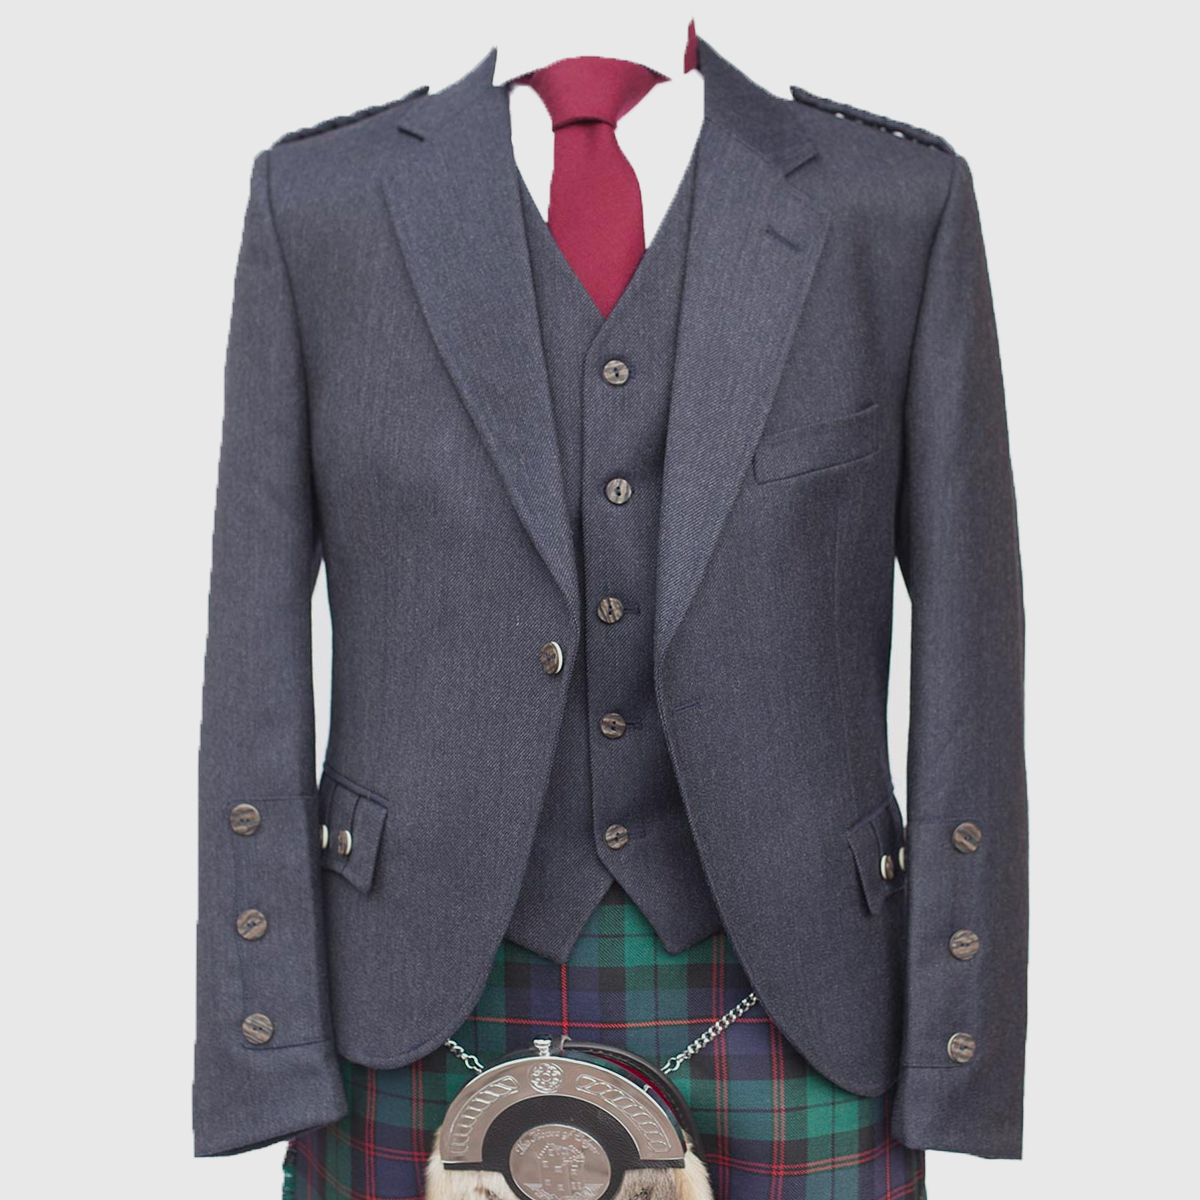 Tweed Kilt Jacket + Waistcoat (Crail) - Midnight - Artisans of Scotland